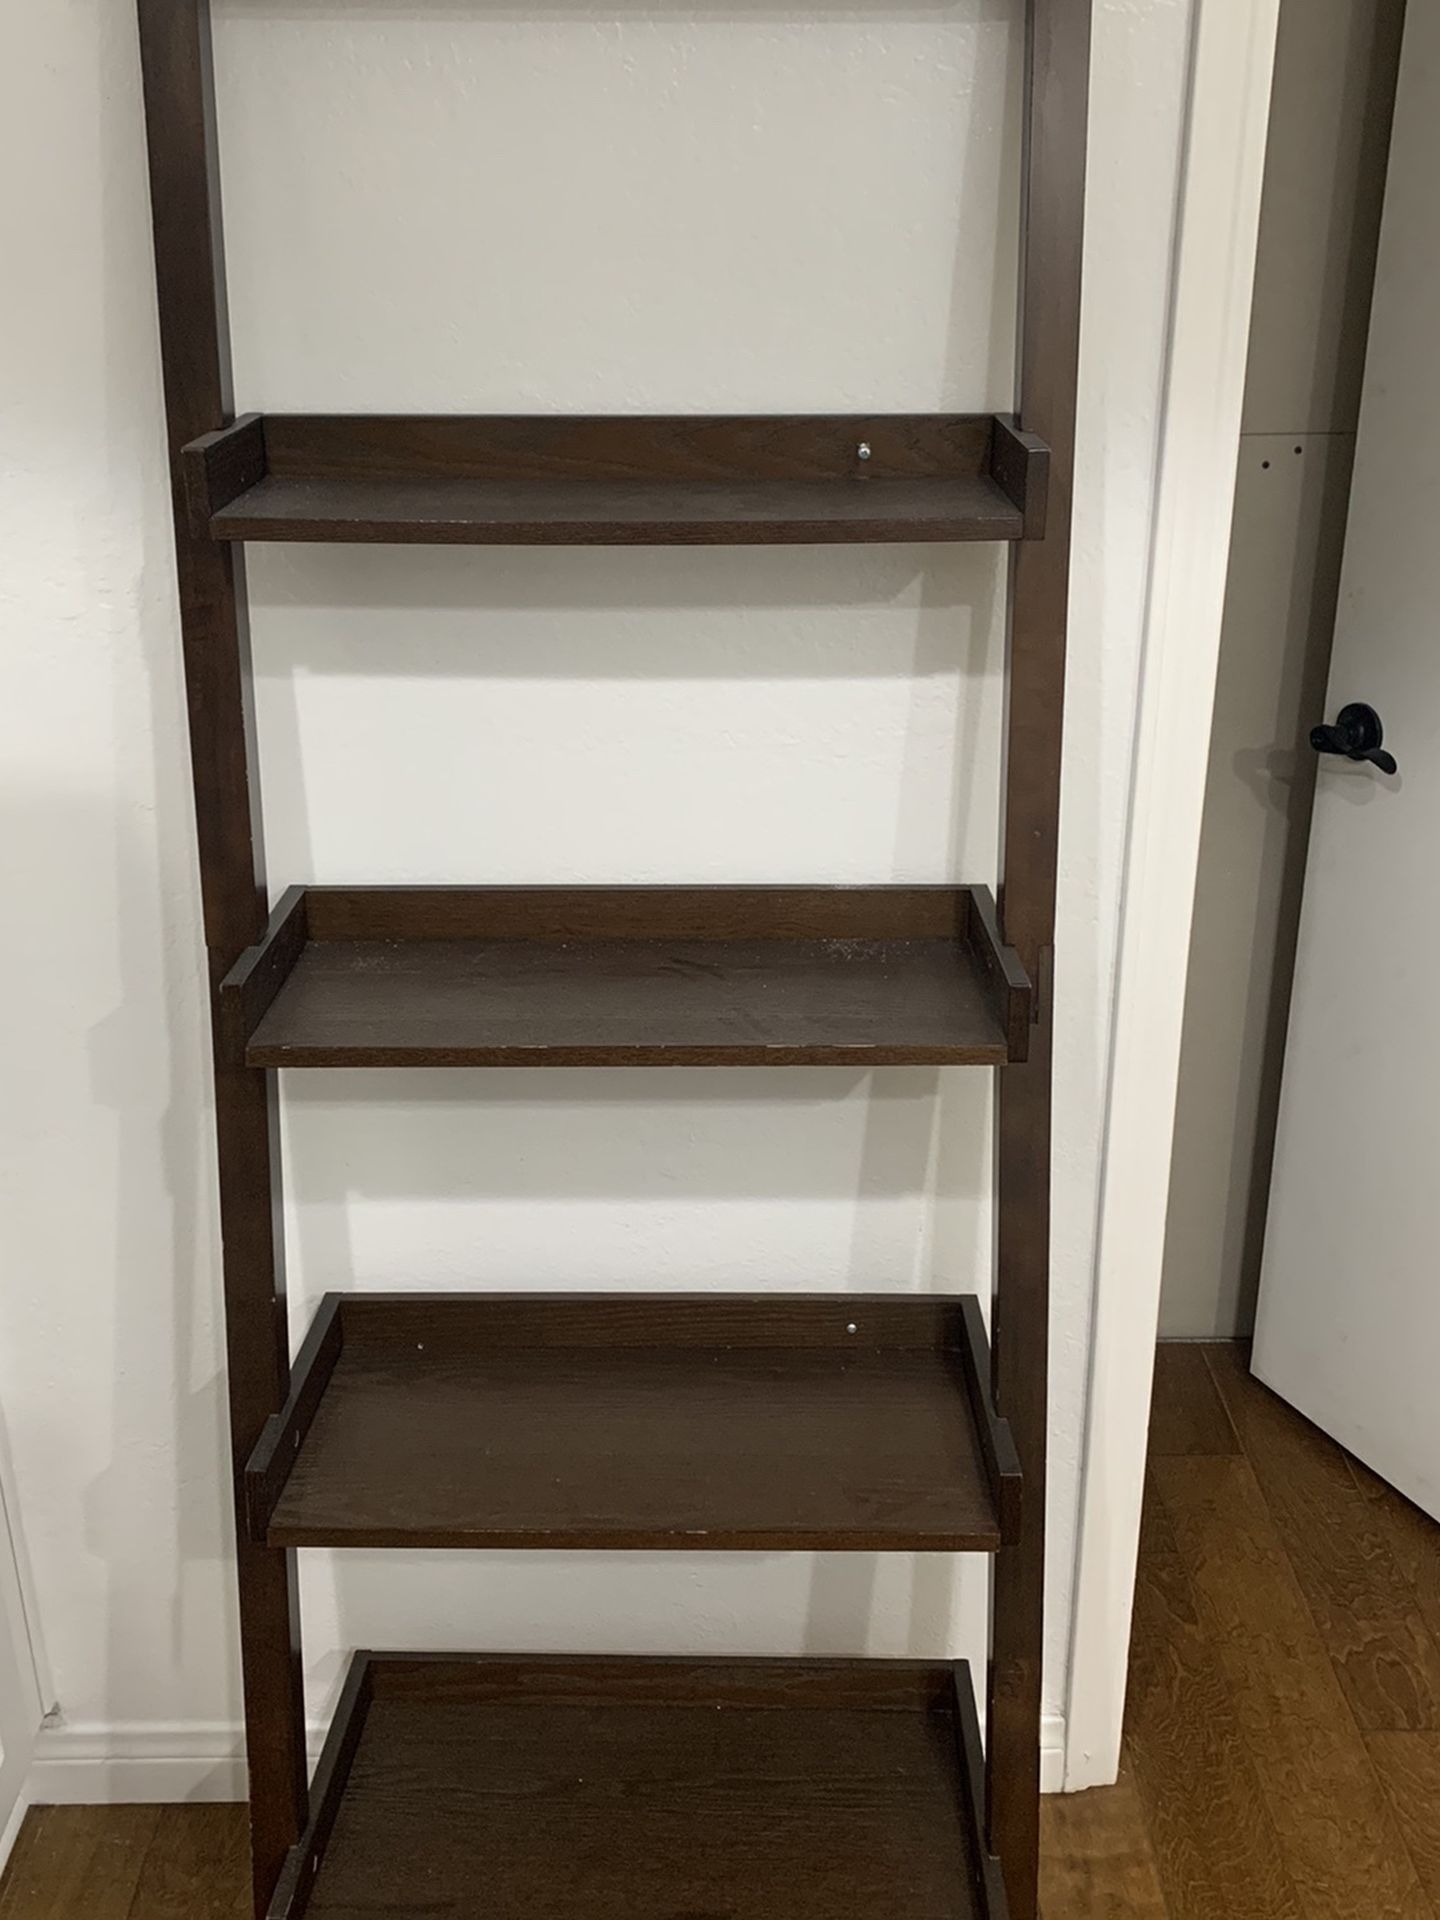 Standing Wood 5 Shelf Decorative Ladder - Dark Walnut - Living Room/bedroom/kitchen/office - $50